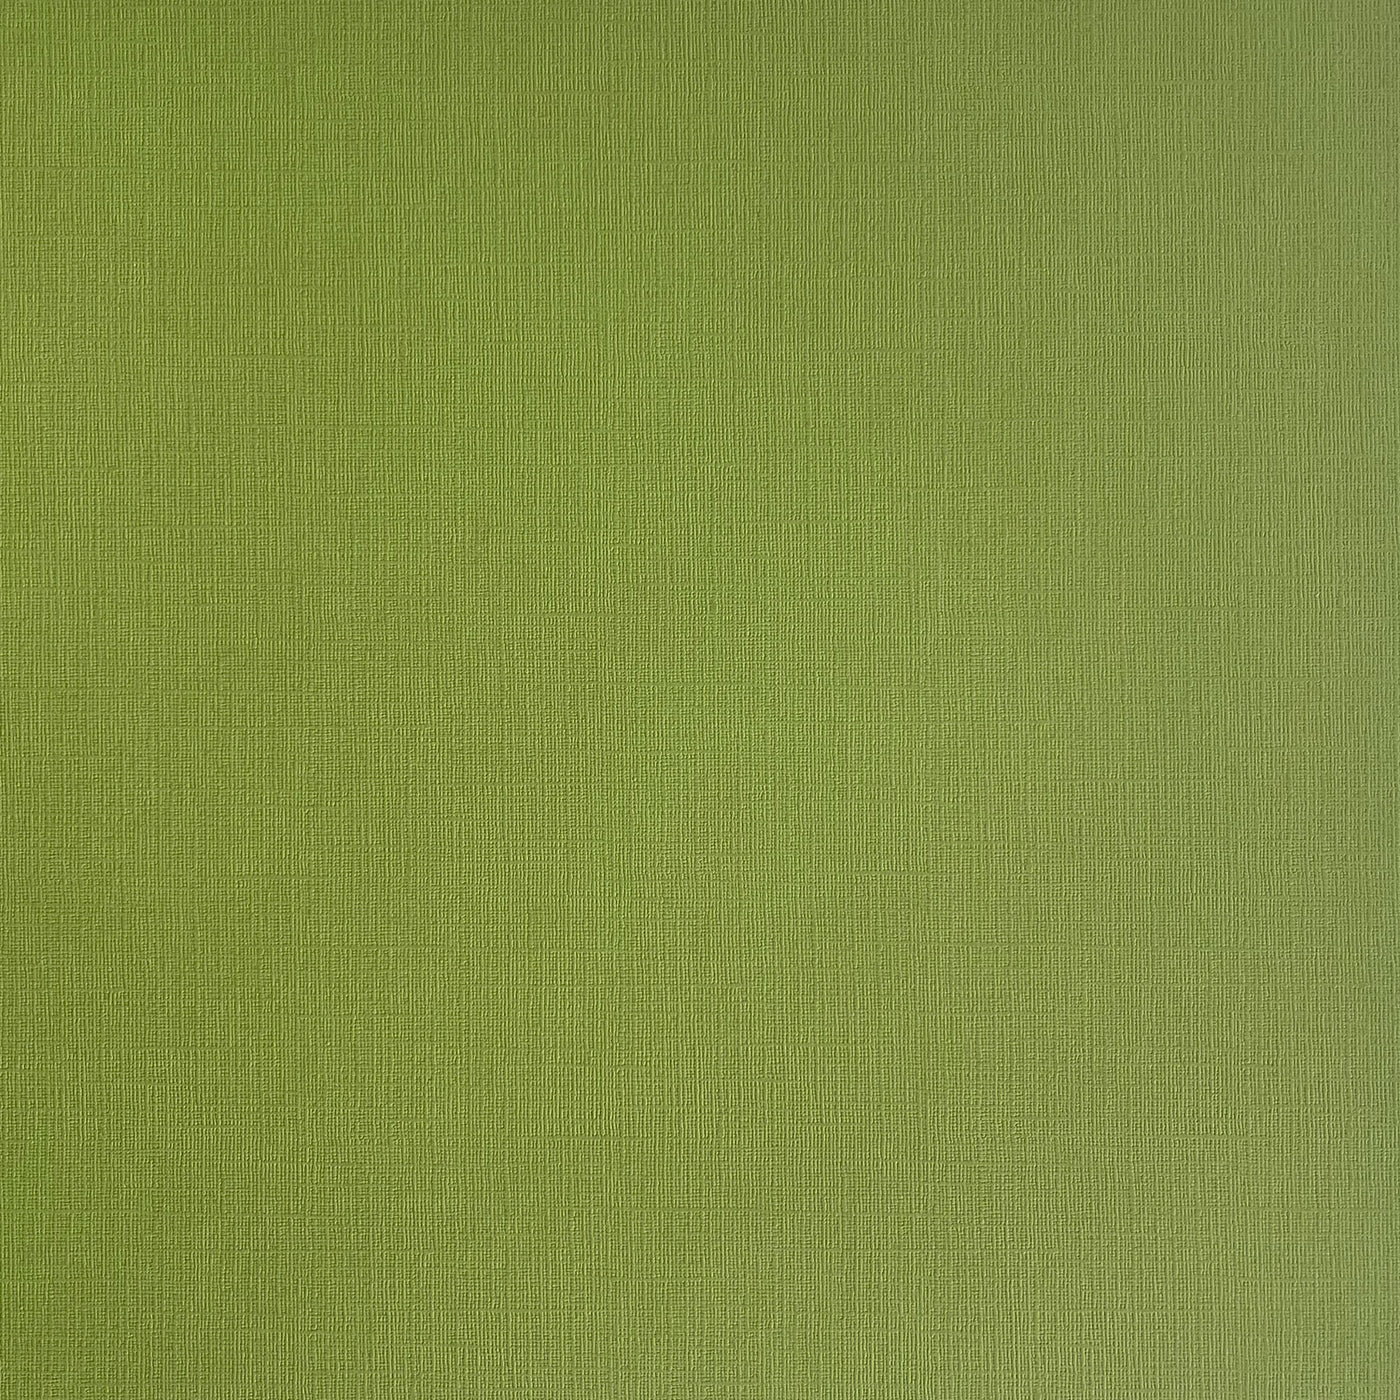 Grasshopper - Textured 12x12 Cardstock - Olive green canvas scrapbook paper